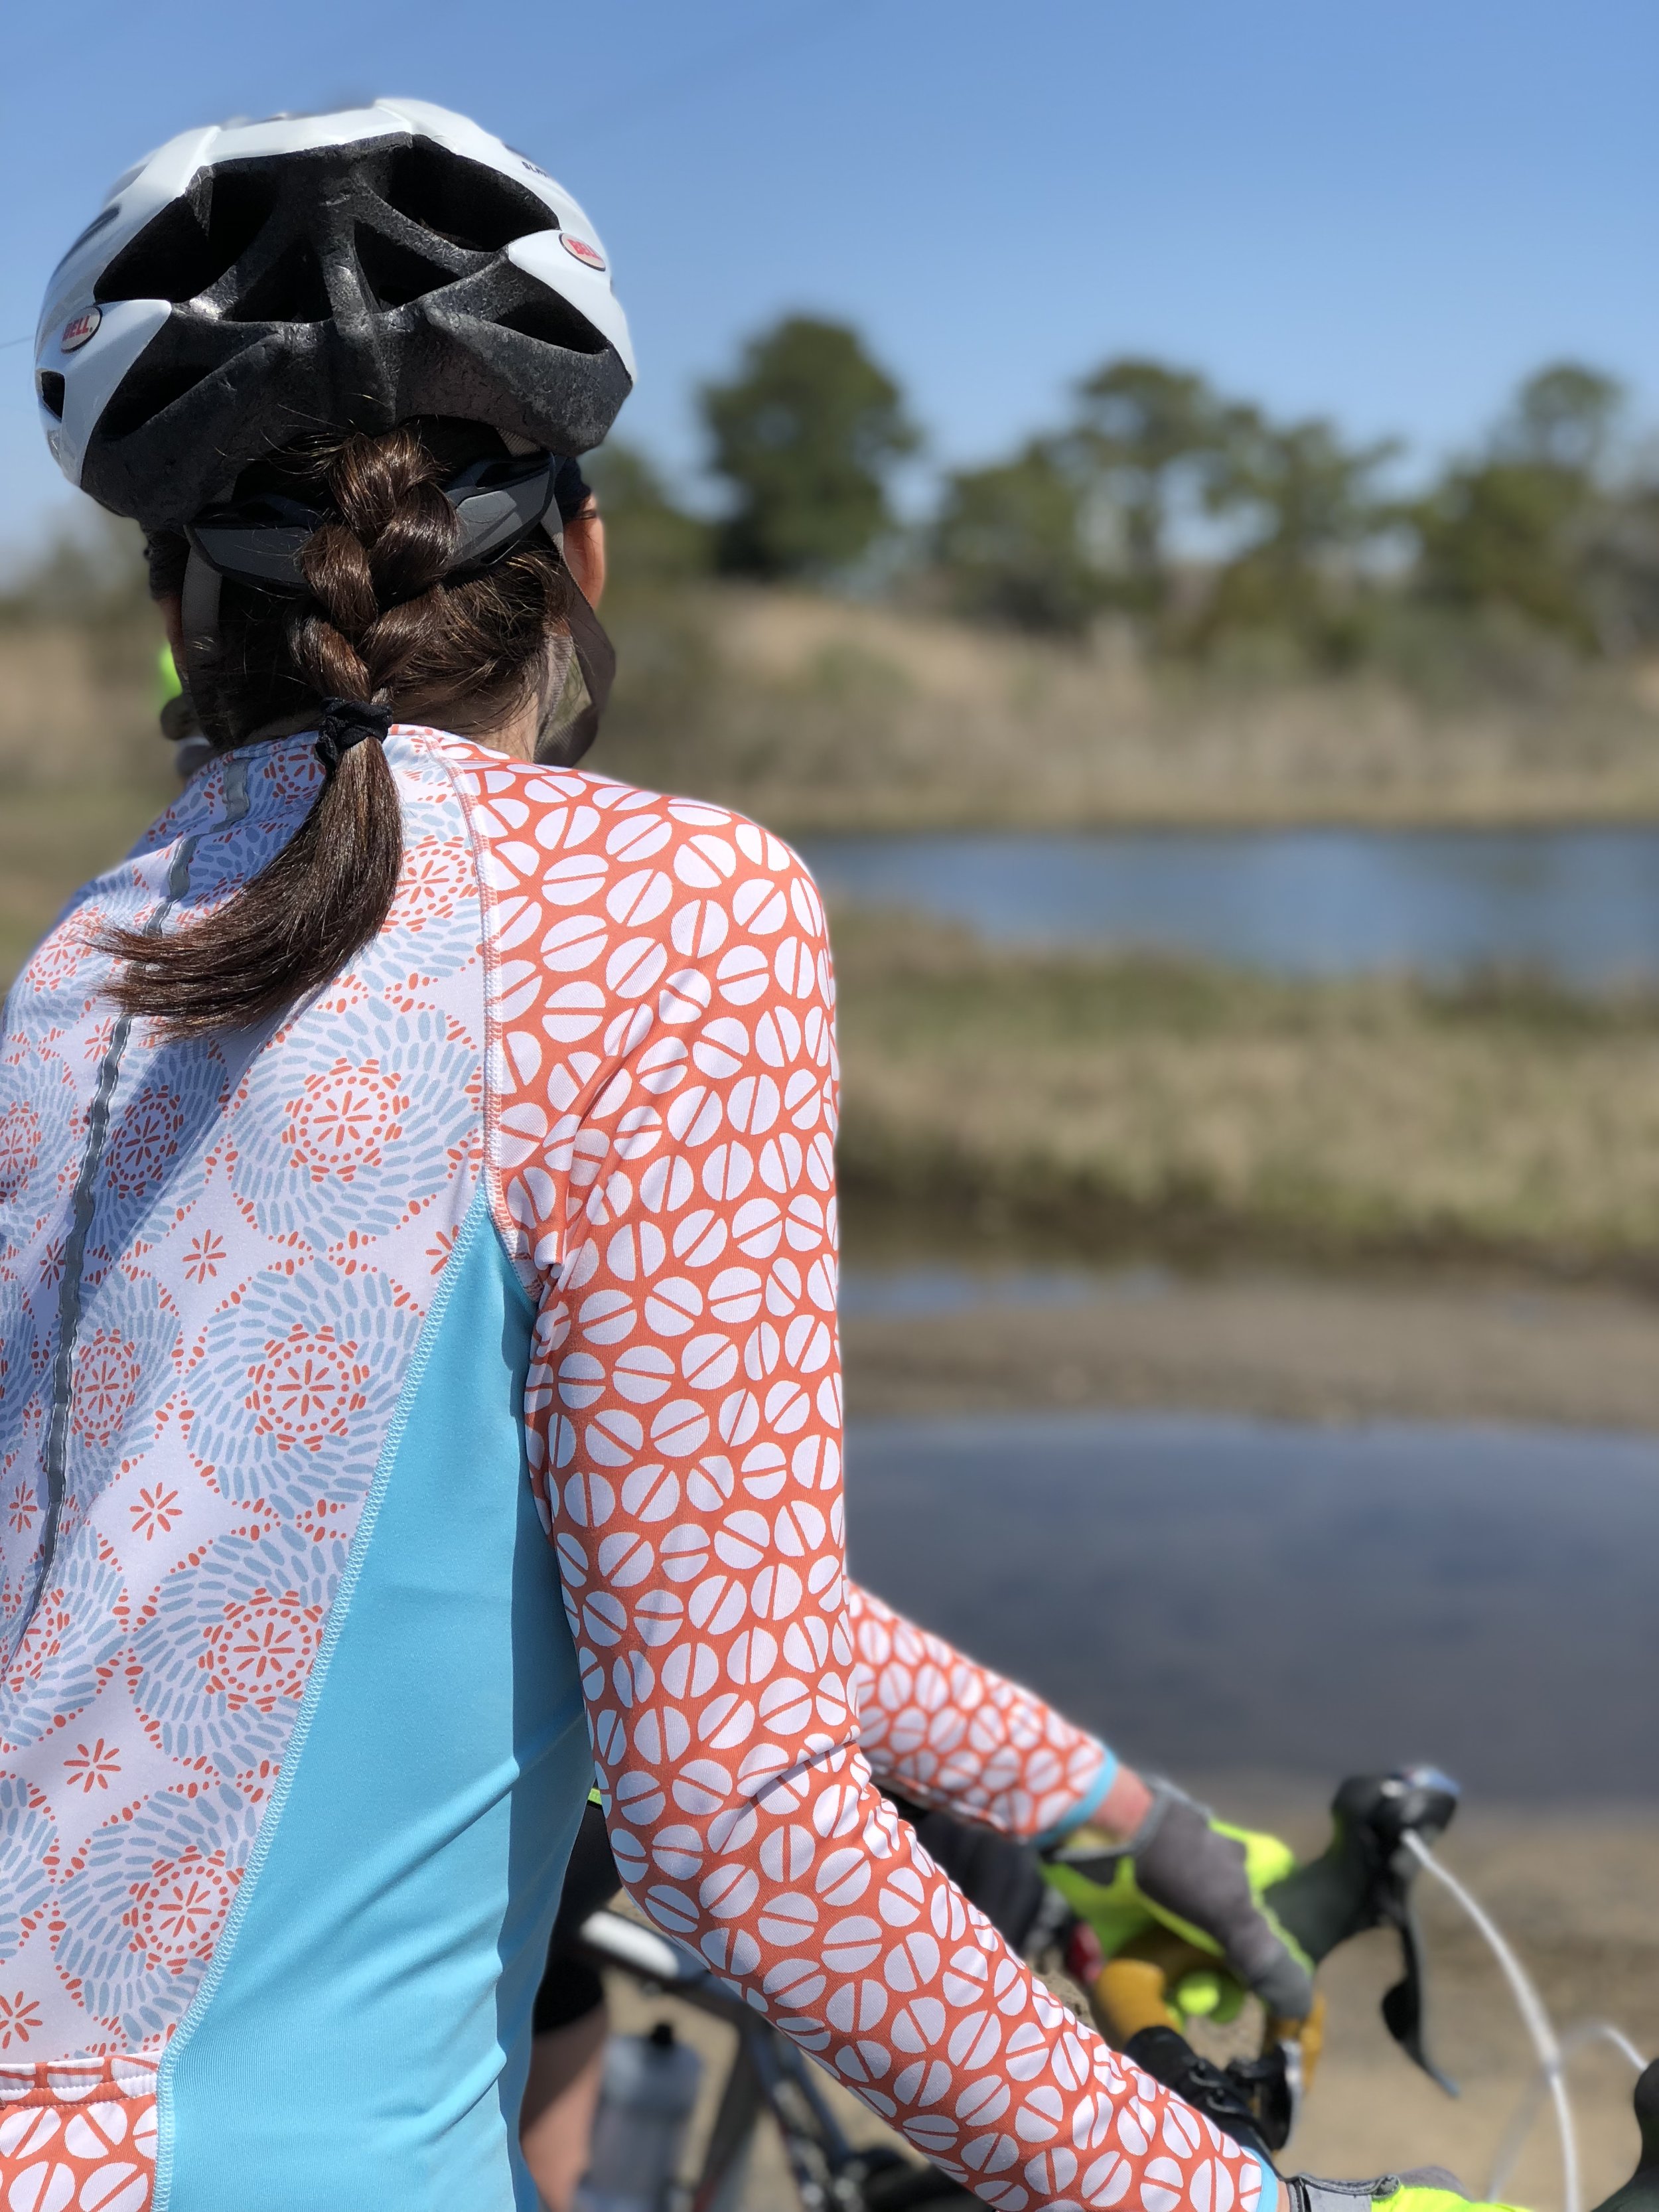 Details about   Women's Cycling Jersey Clothing Bicycle Sportswear Short Sleeve Bike Shirt J98 